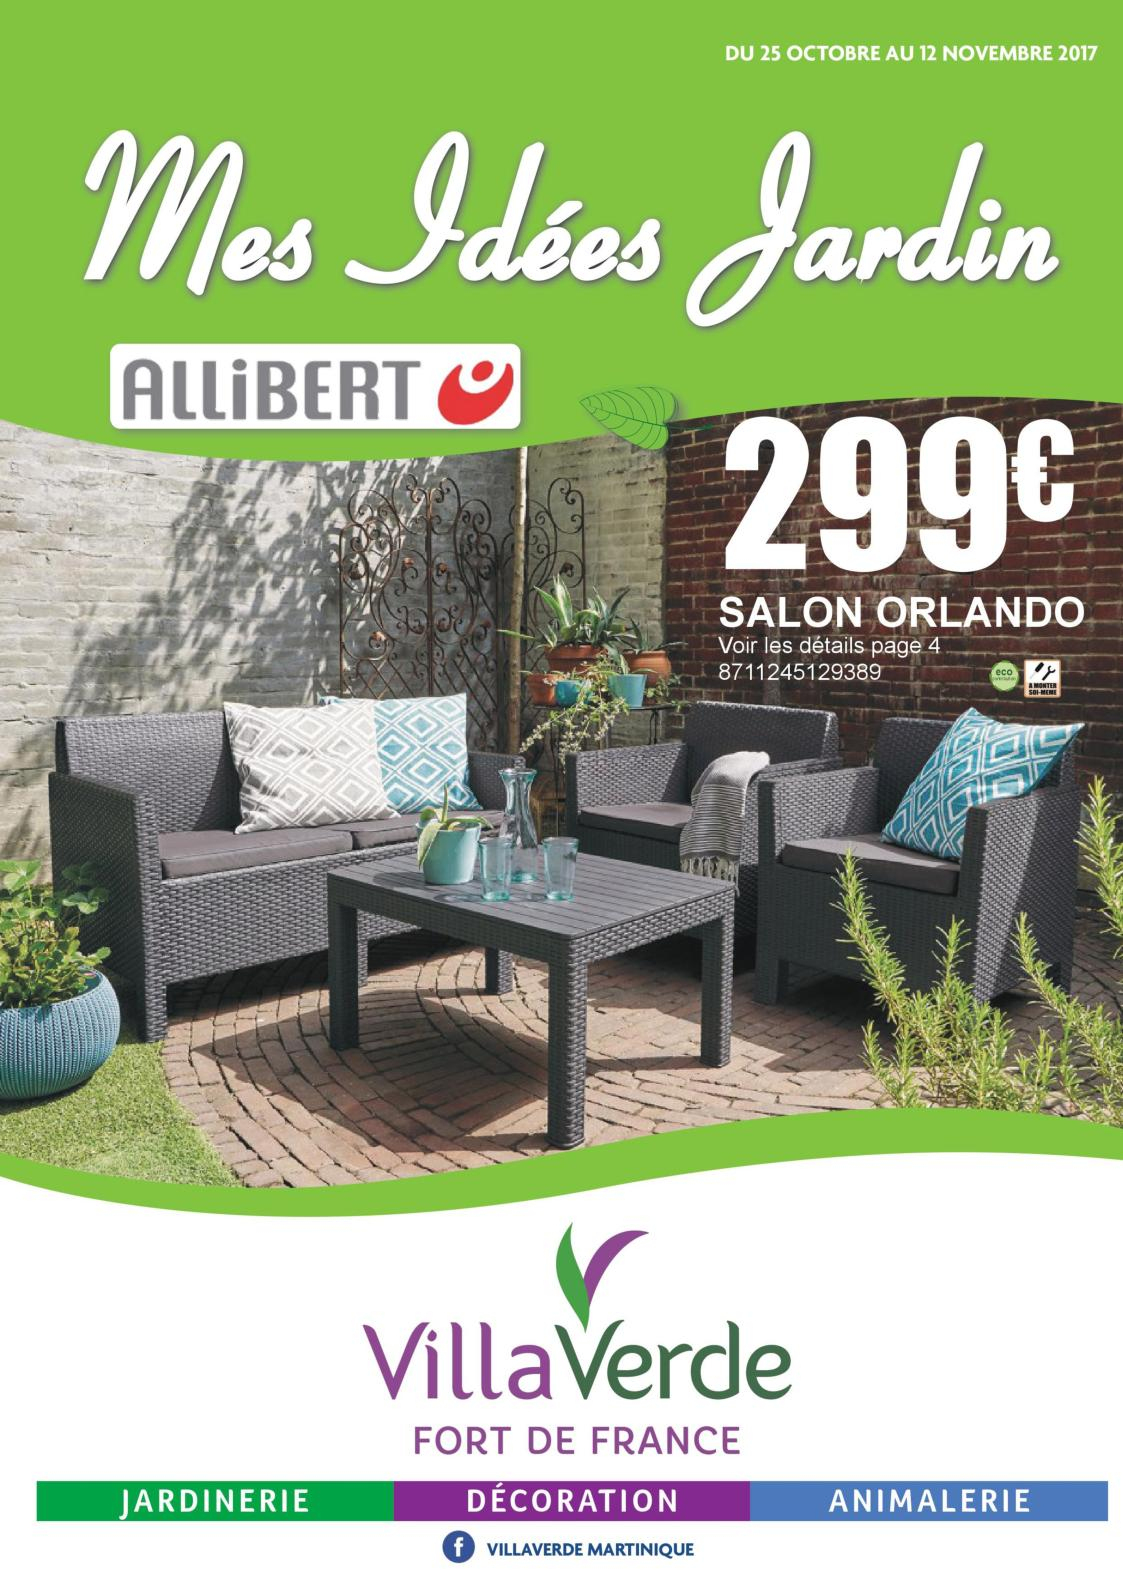 Villaverde - Mes Idées Jardin - Calameo Downloader concernant Salon De Jardin Villaverde